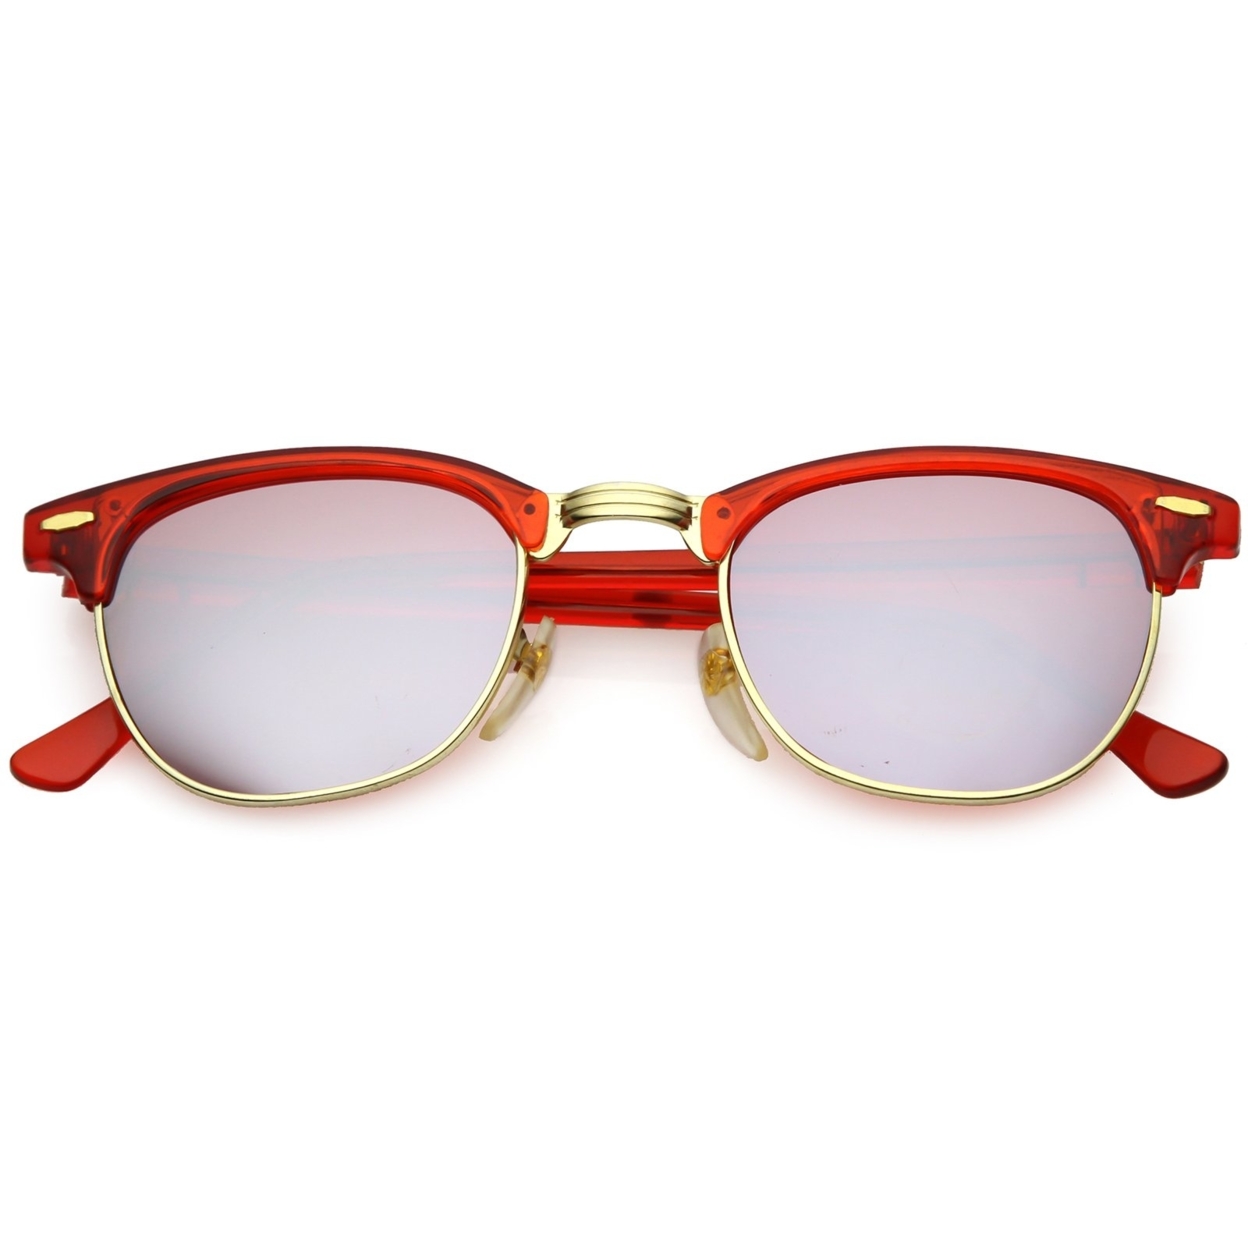 True Vintage Horn Rimmed Semi Rimless Sunglasses Mirrored Square Lens 49mm - Magenta / Red Mirror